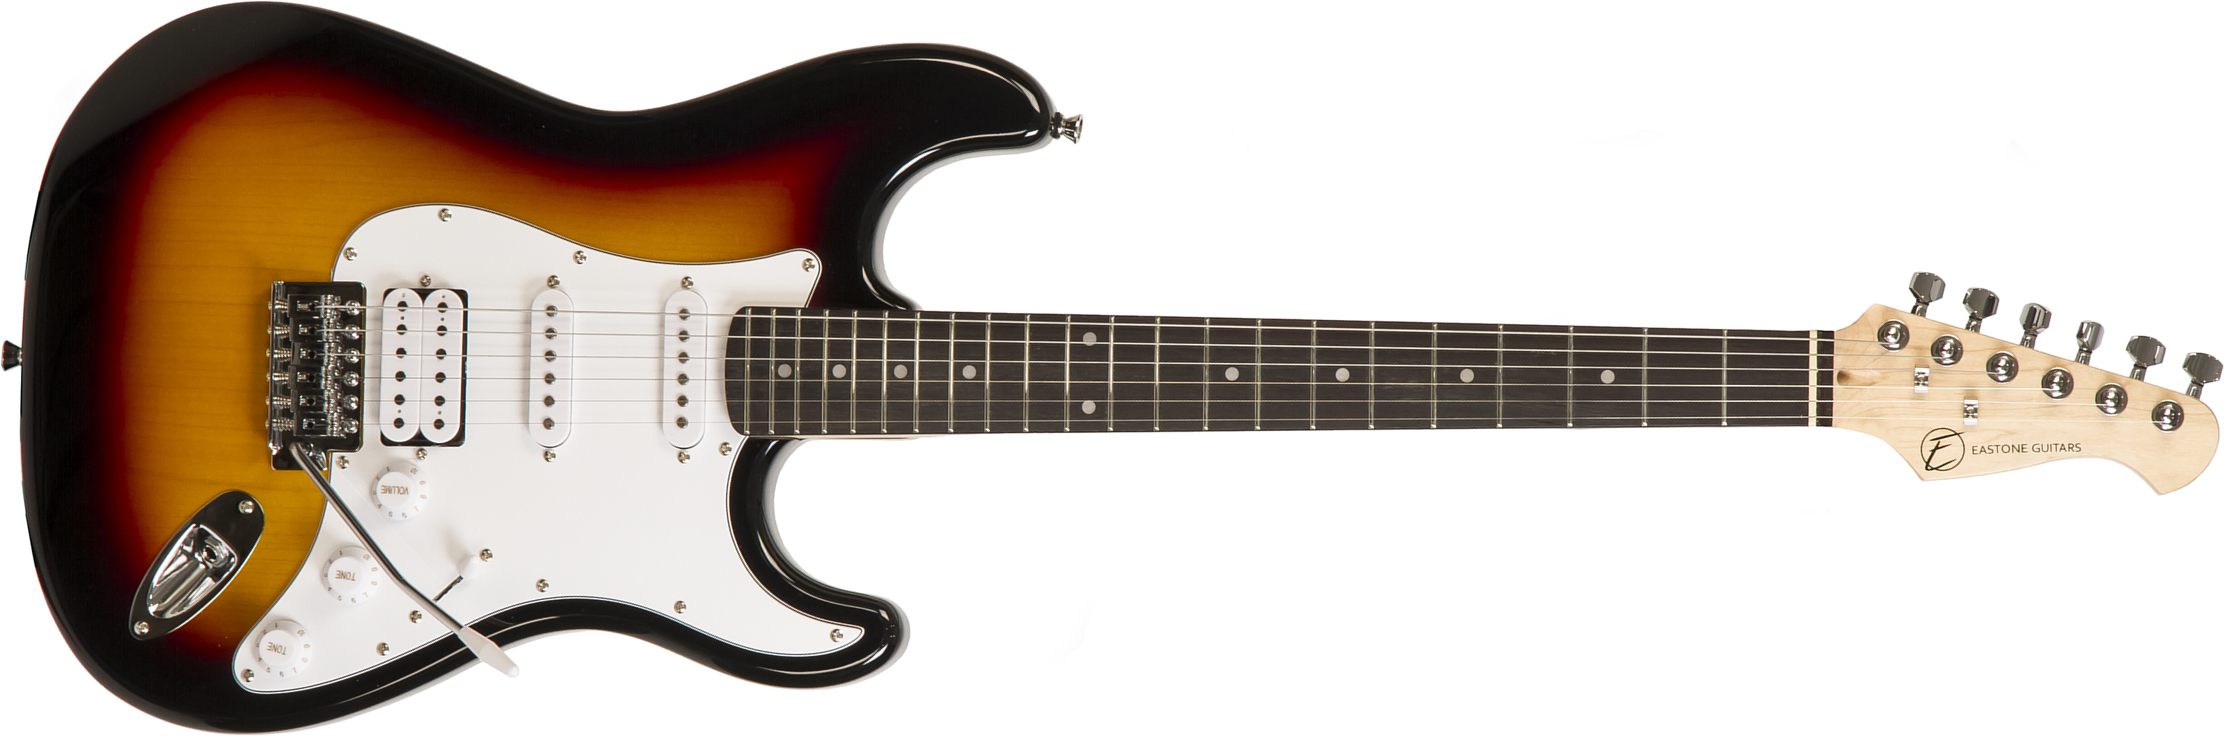 Eastone Str80t 3ts Hss Trem Pur - Sunburst - Elektrische gitaar in Str-vorm - Main picture